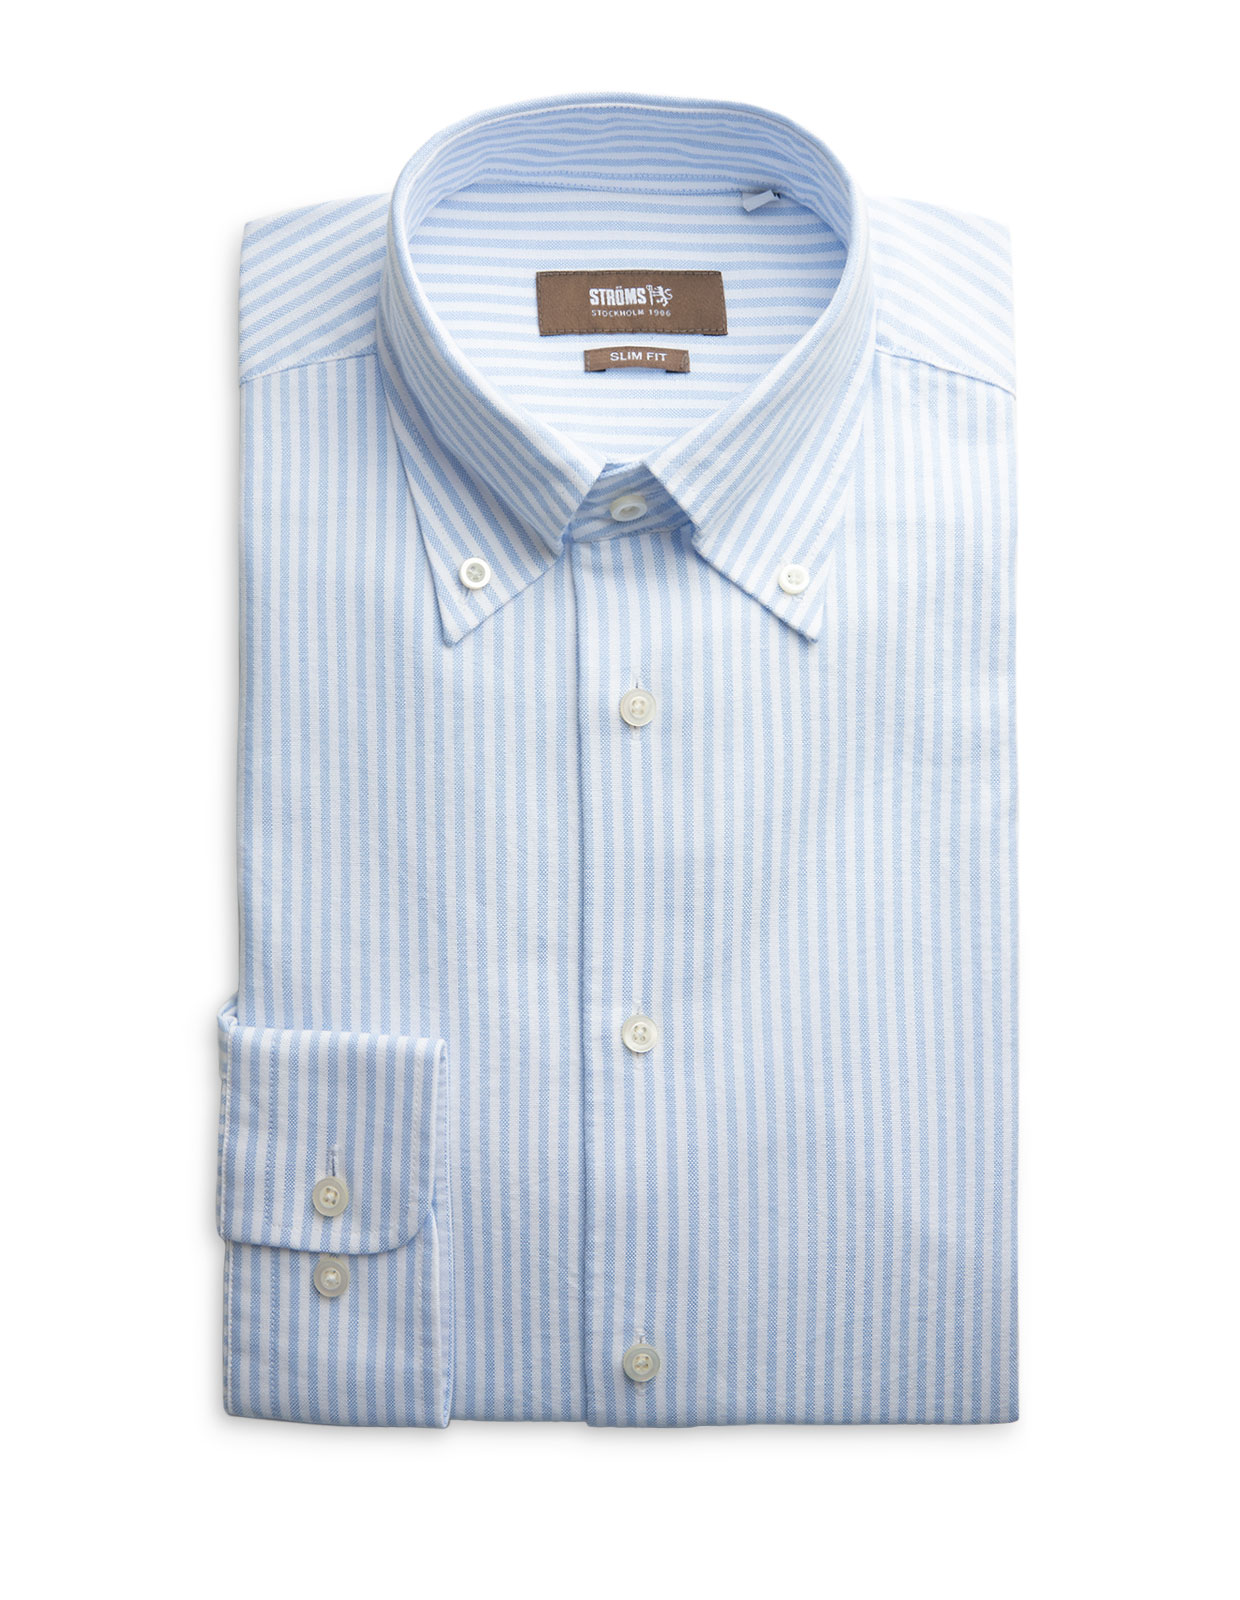 Slim Fit Extra Long Sleeve Oxford Shirt Blue/White Stripe